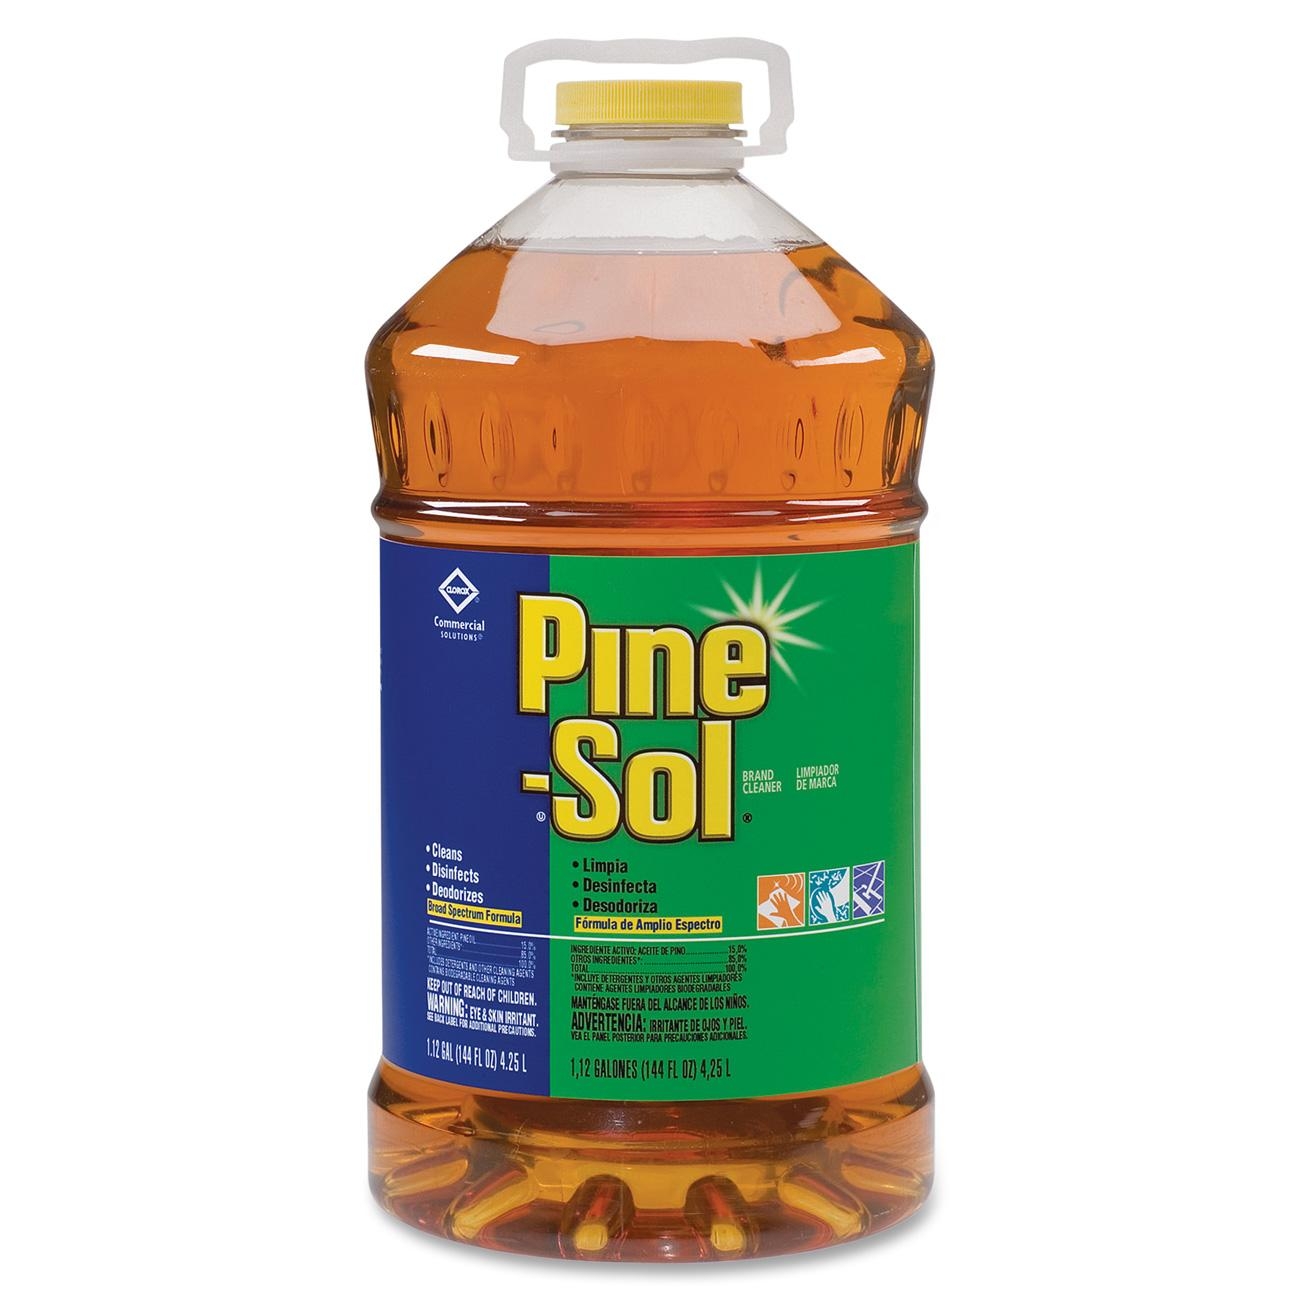 pine-sol-original-delta-distributing